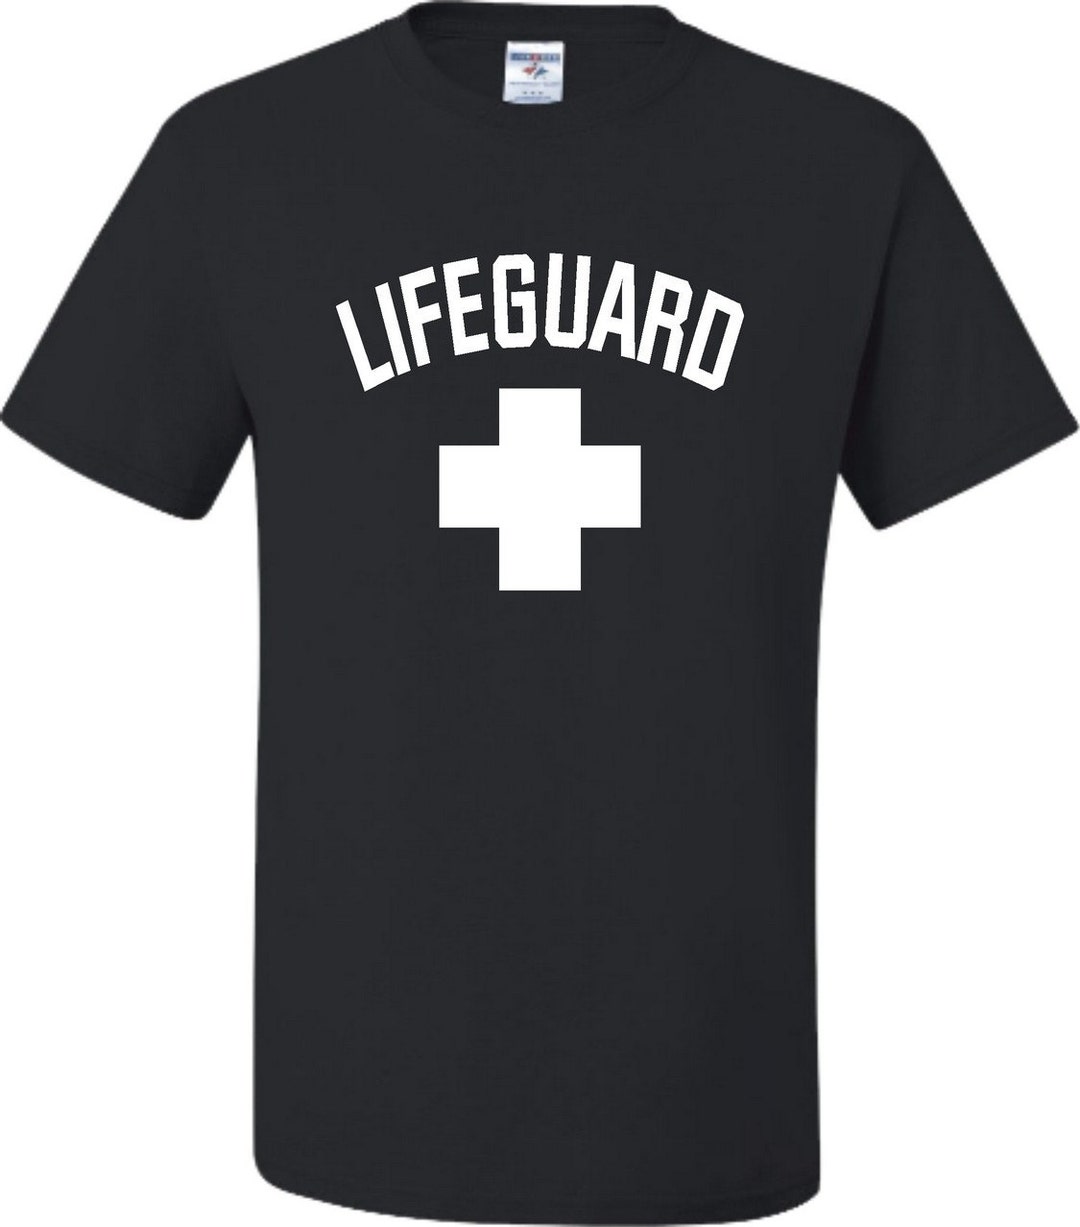 Adult Lifeguard T-shirt - Etsy